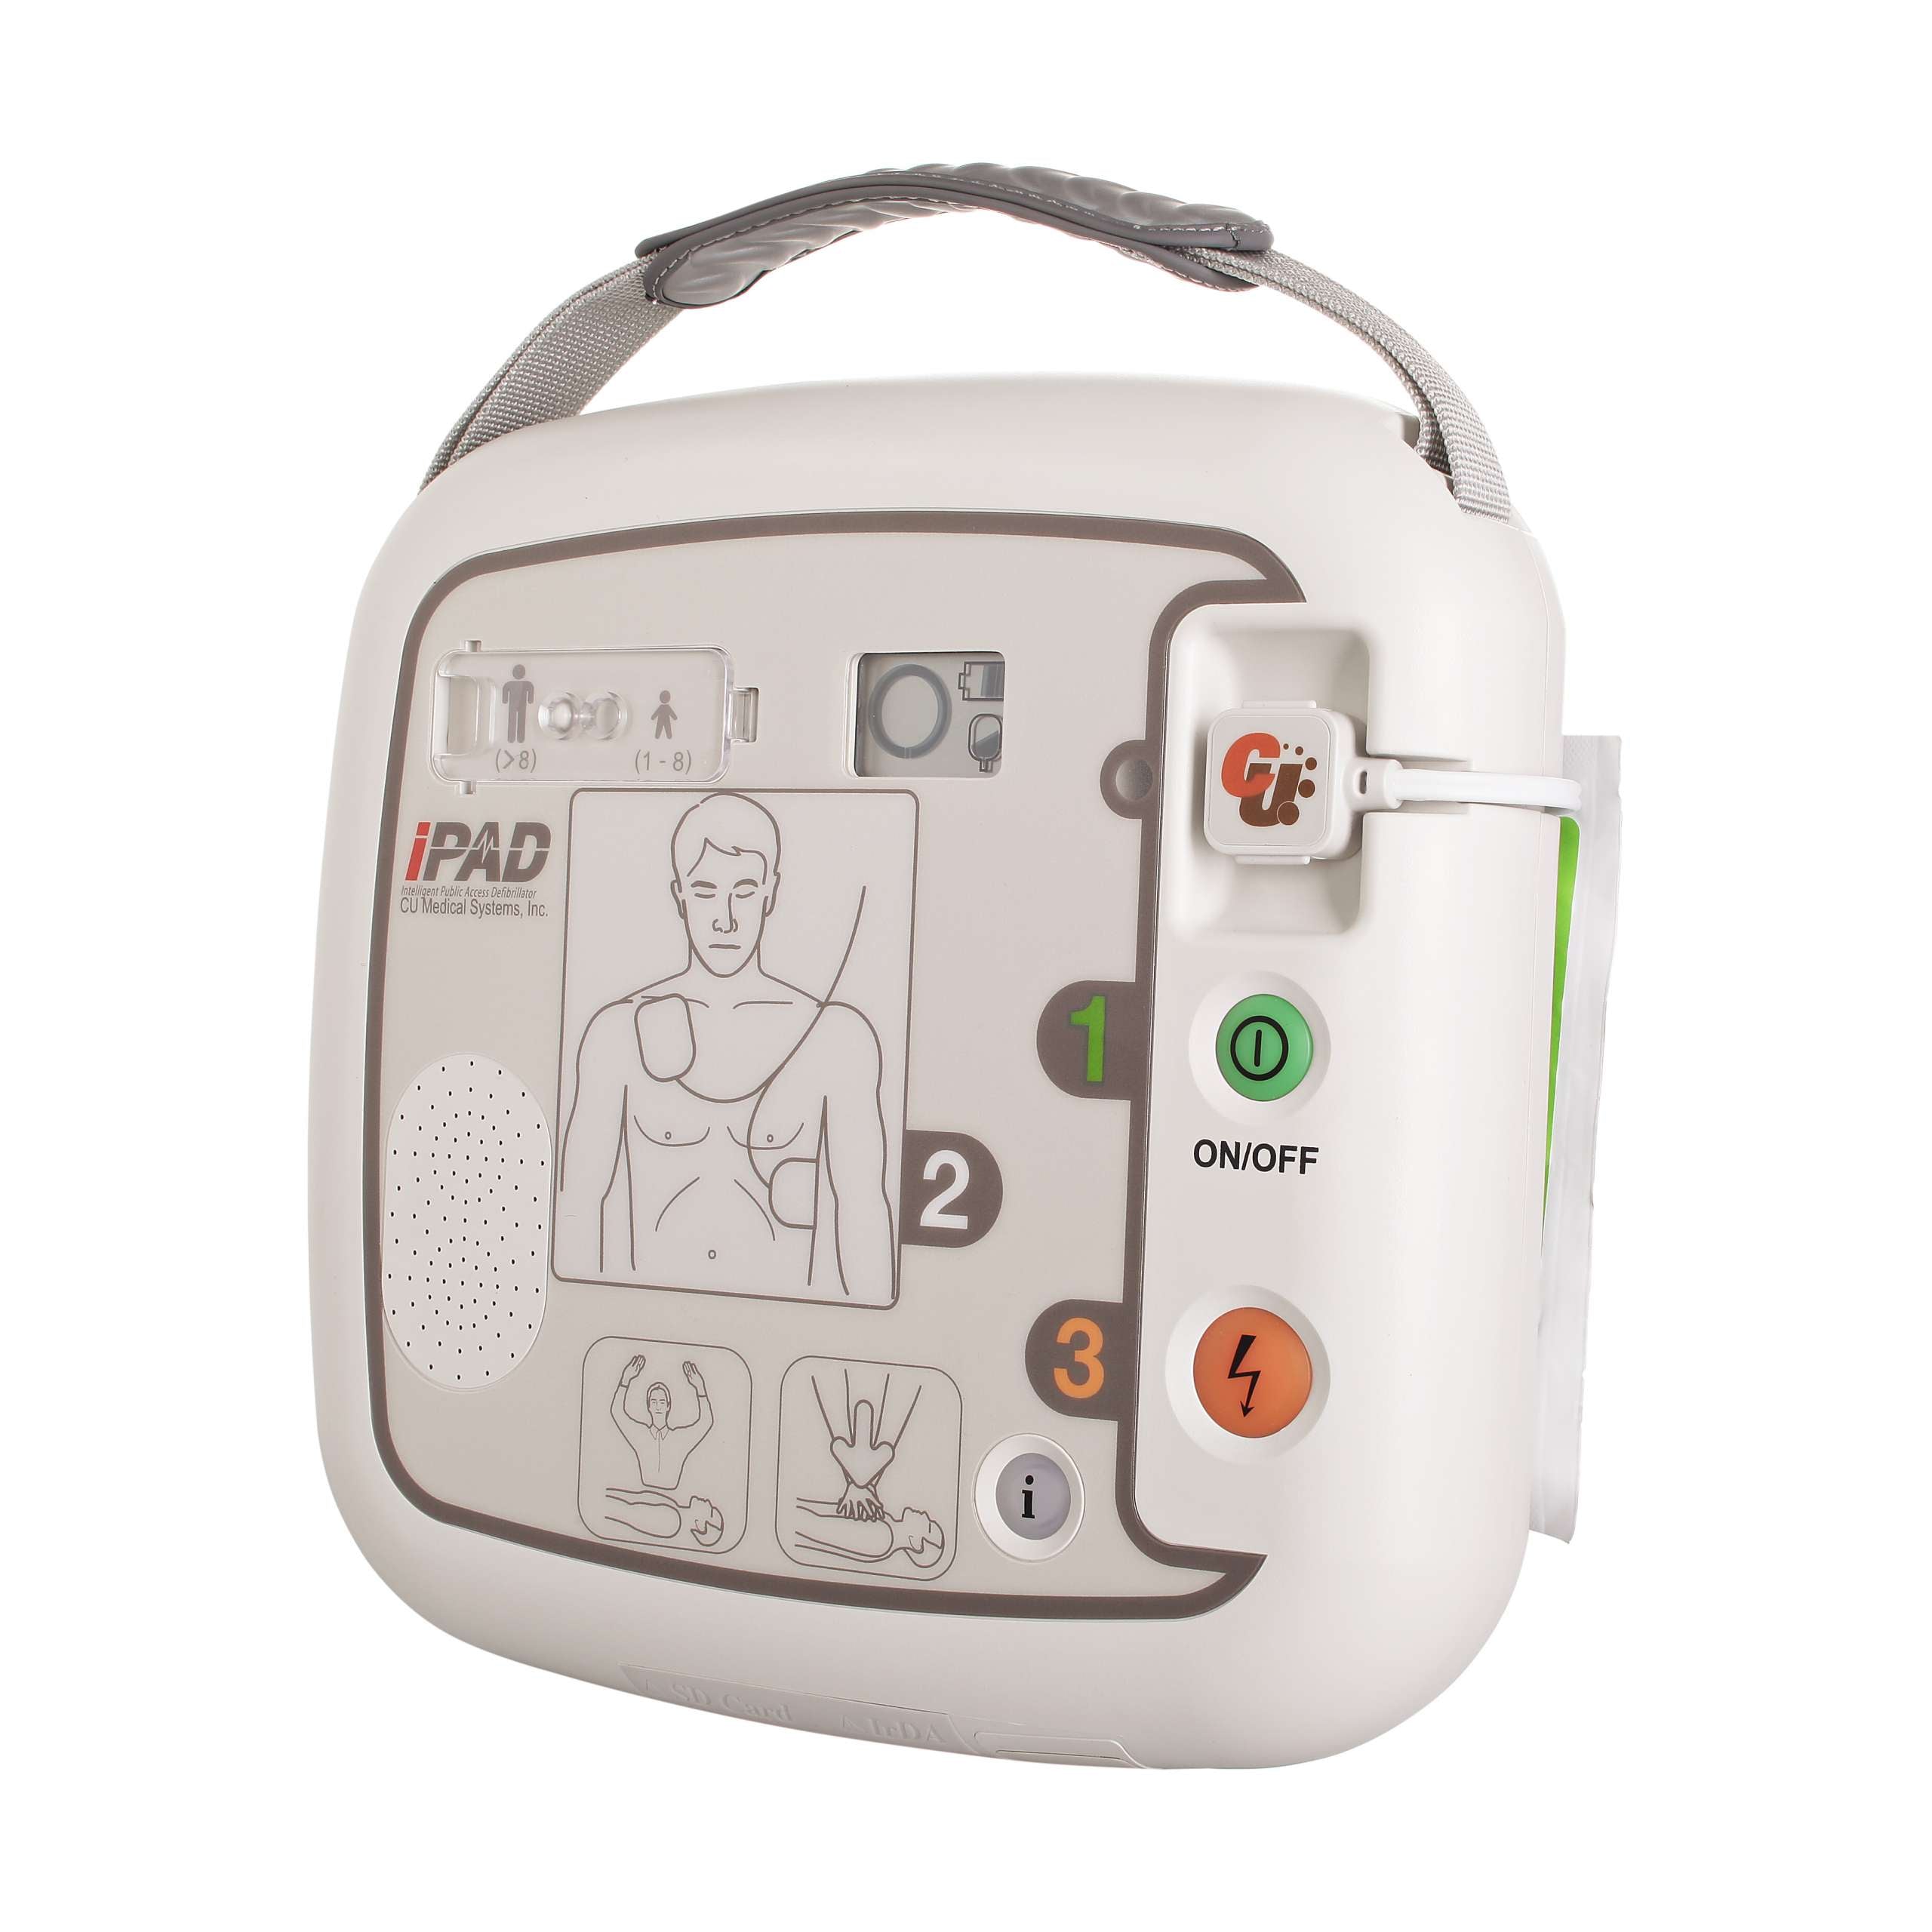 iPAD SP1 Semi-Auto Defibrillator